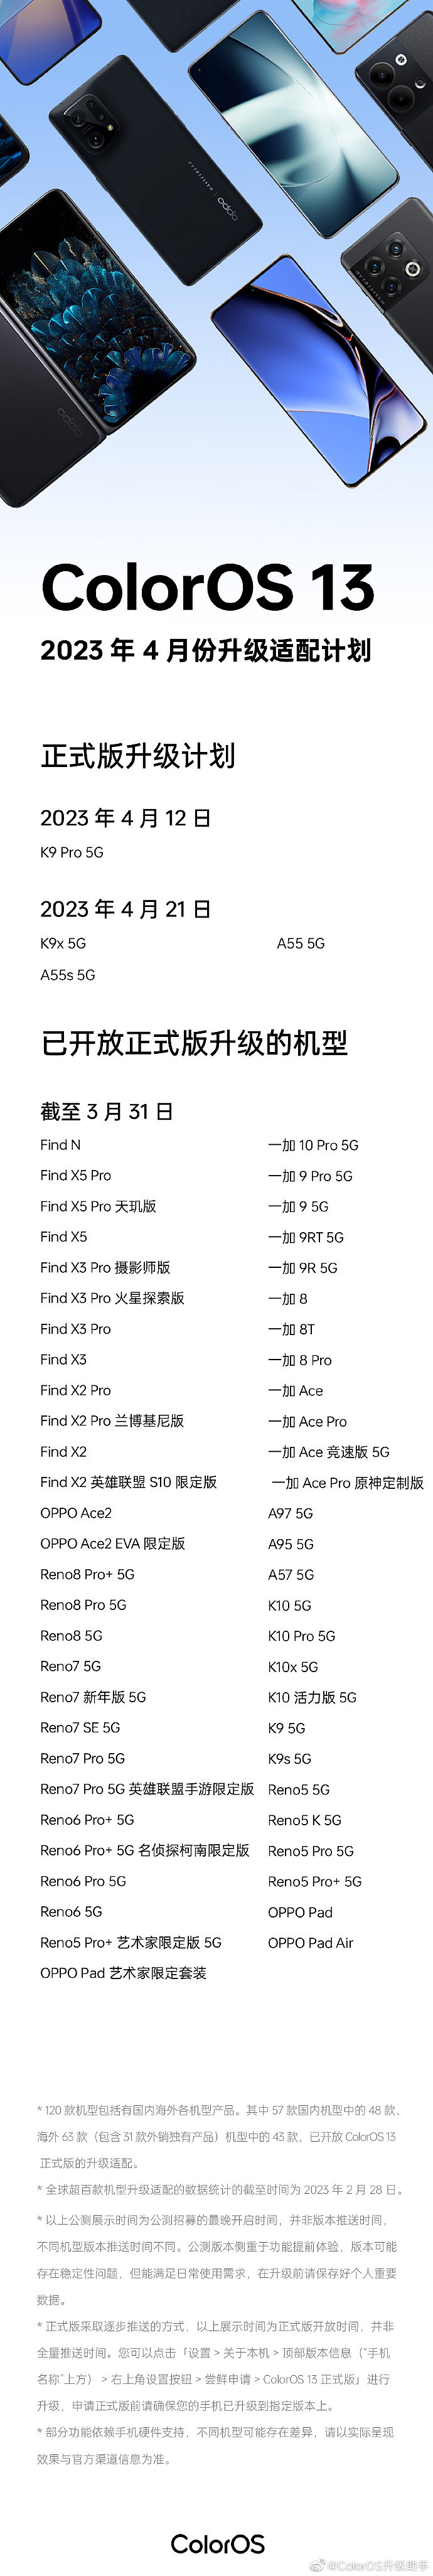 OPPO ColorOS 13 系统 4 月升级适配计划发布，涉及 K9 Pro、K9x 等多款机型 - 2